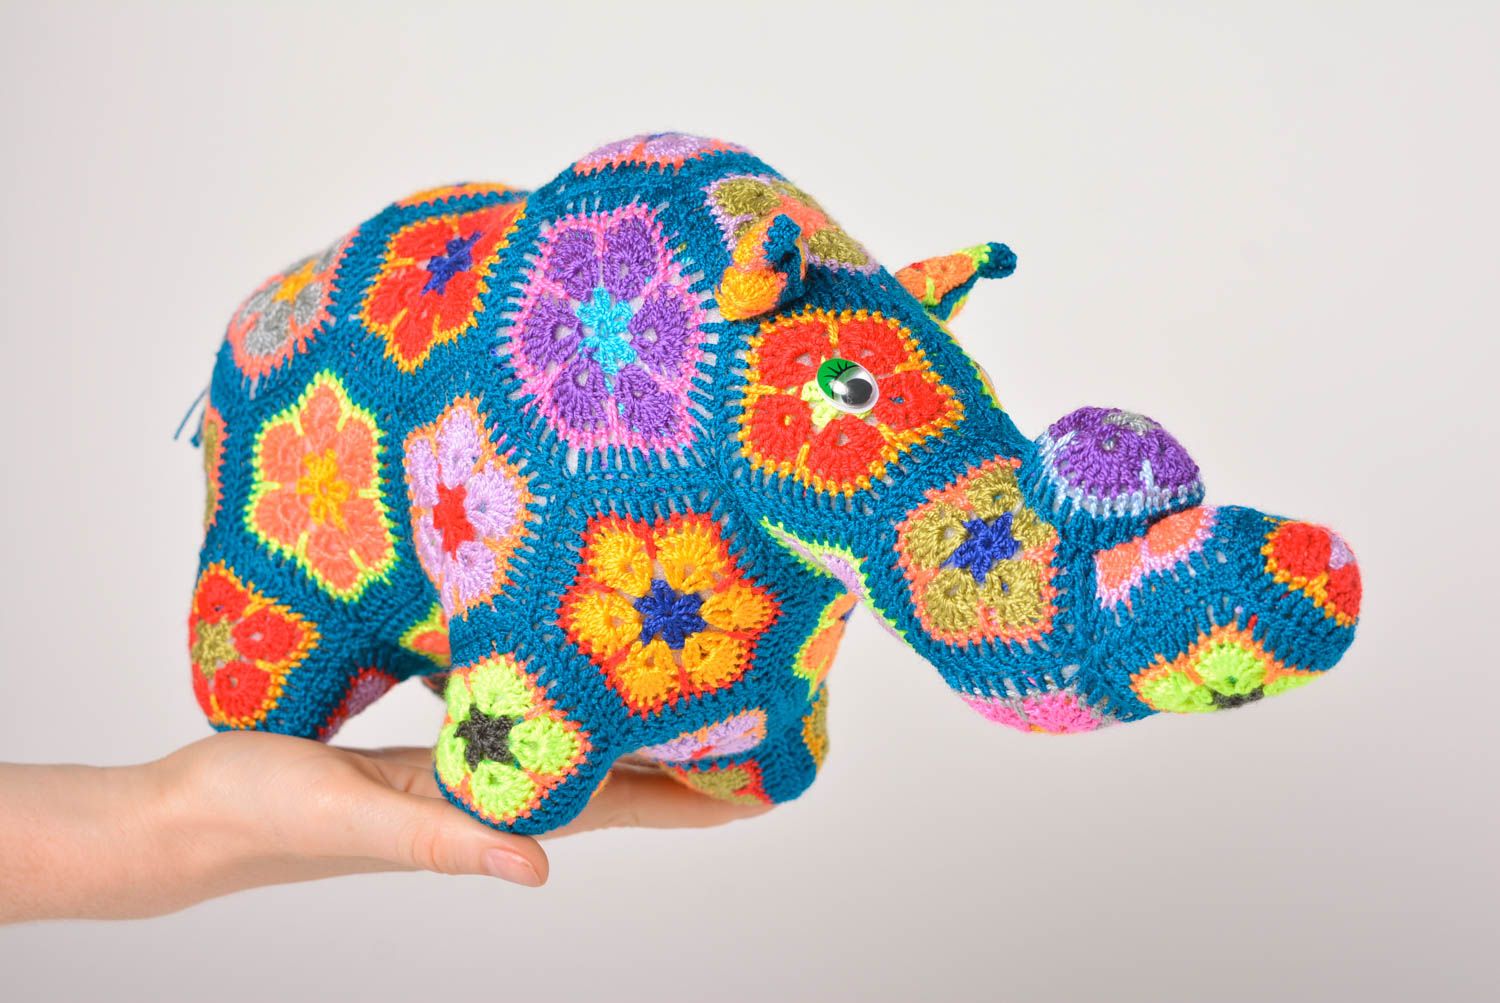 Beautiful handmade crochet toy stuffed toy soft toy for kids nursery design photo 5